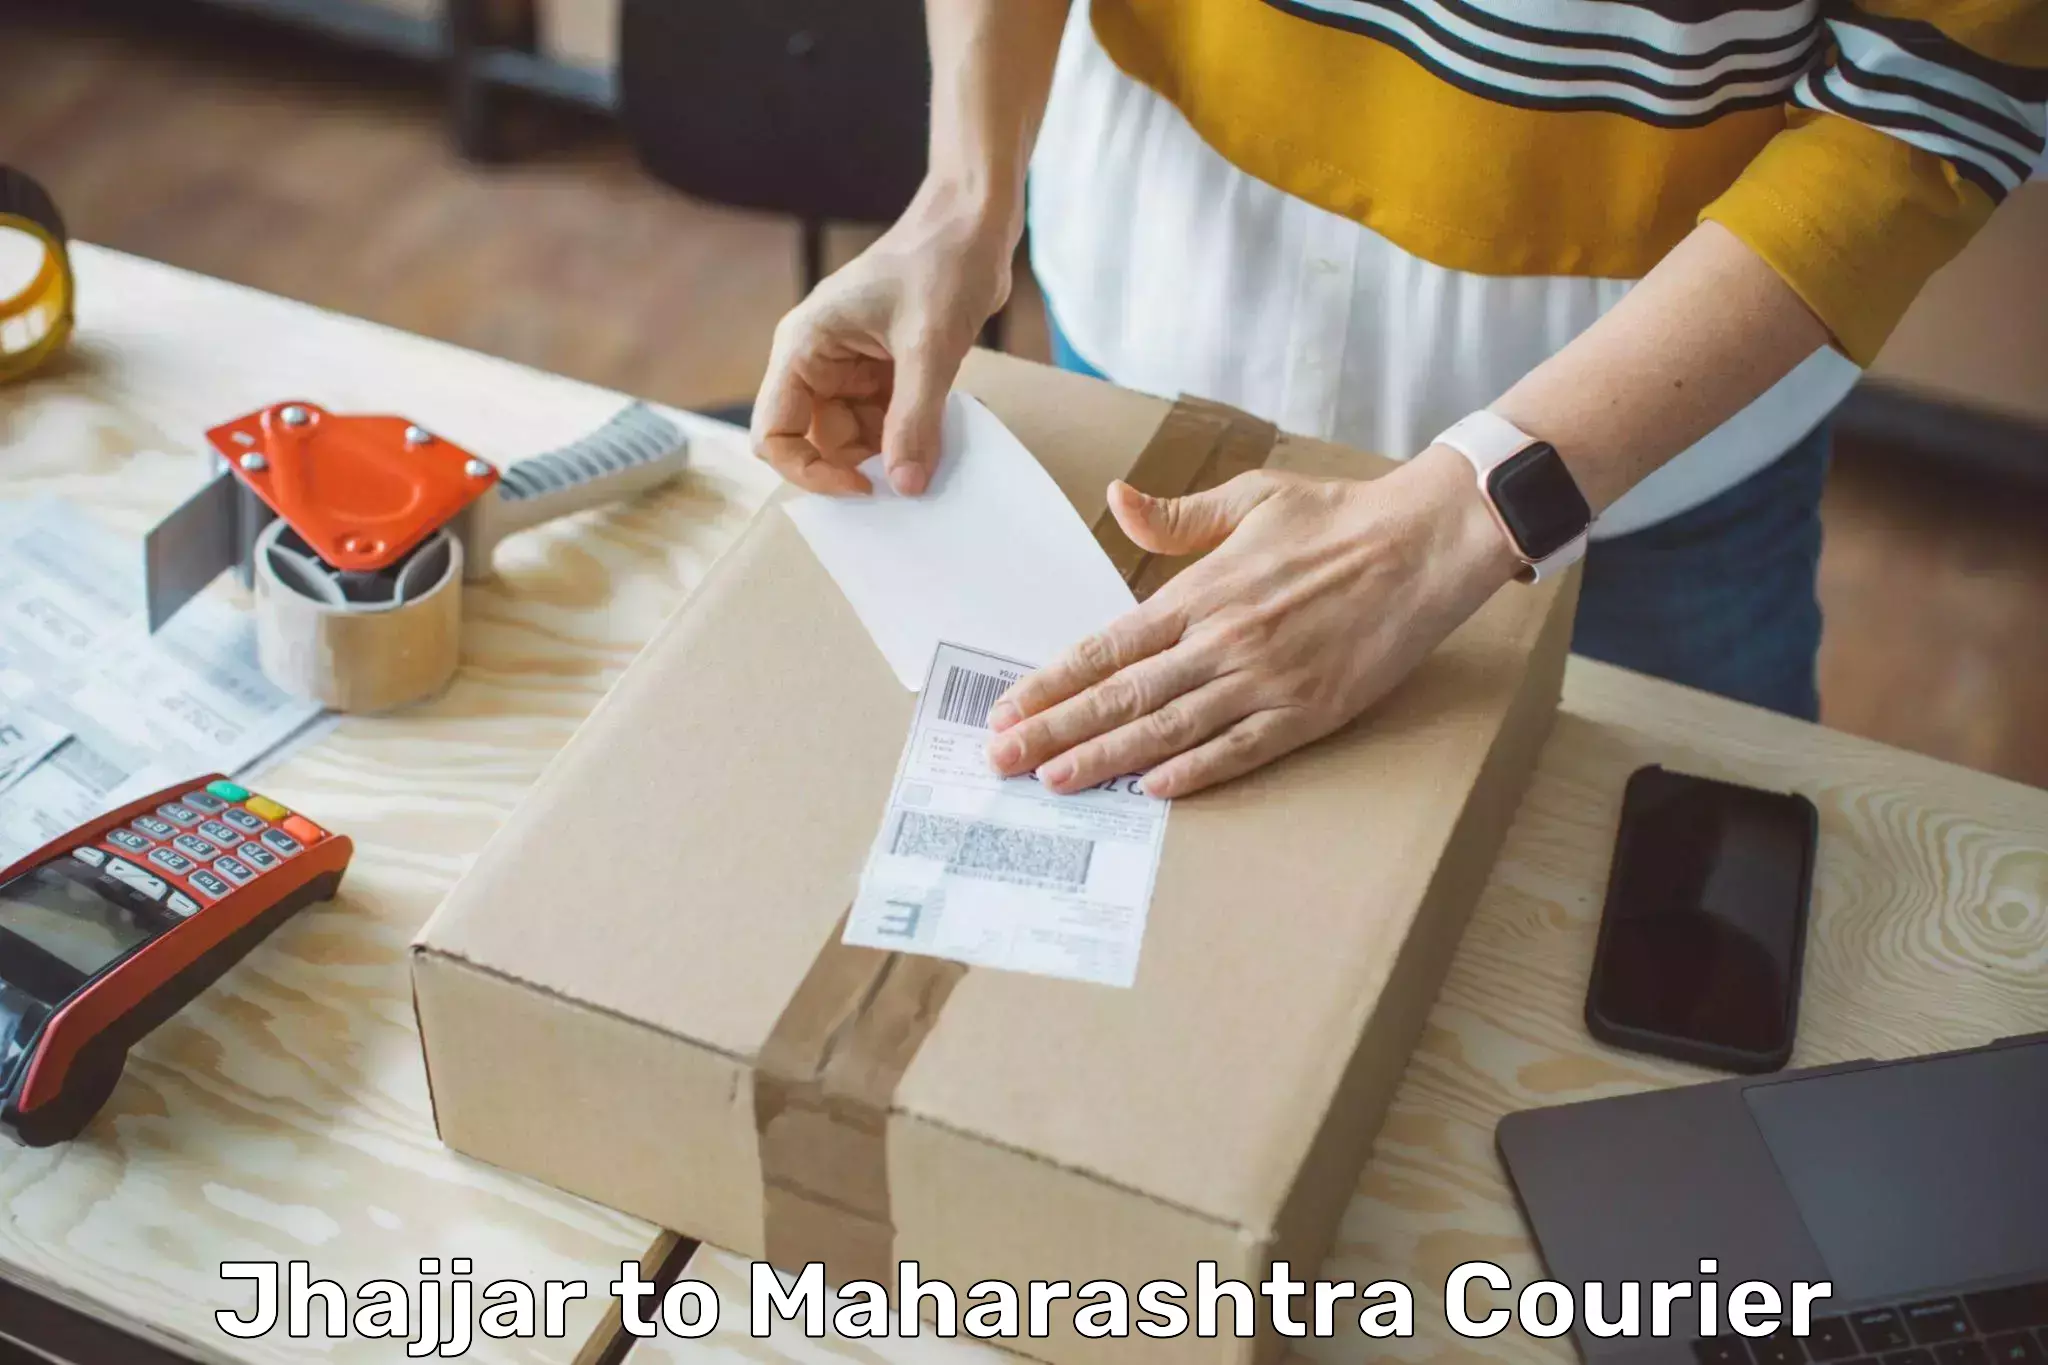 Efficient parcel service Jhajjar to Tata Institute of Social Sciences Mumbai